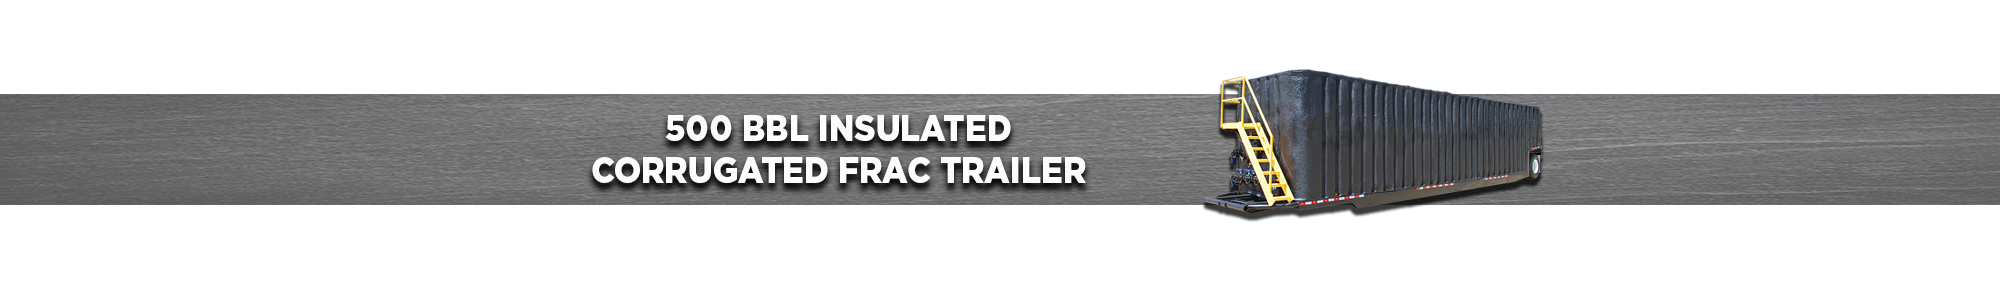 500 BBL Insulated Corrugated Frac Trailer